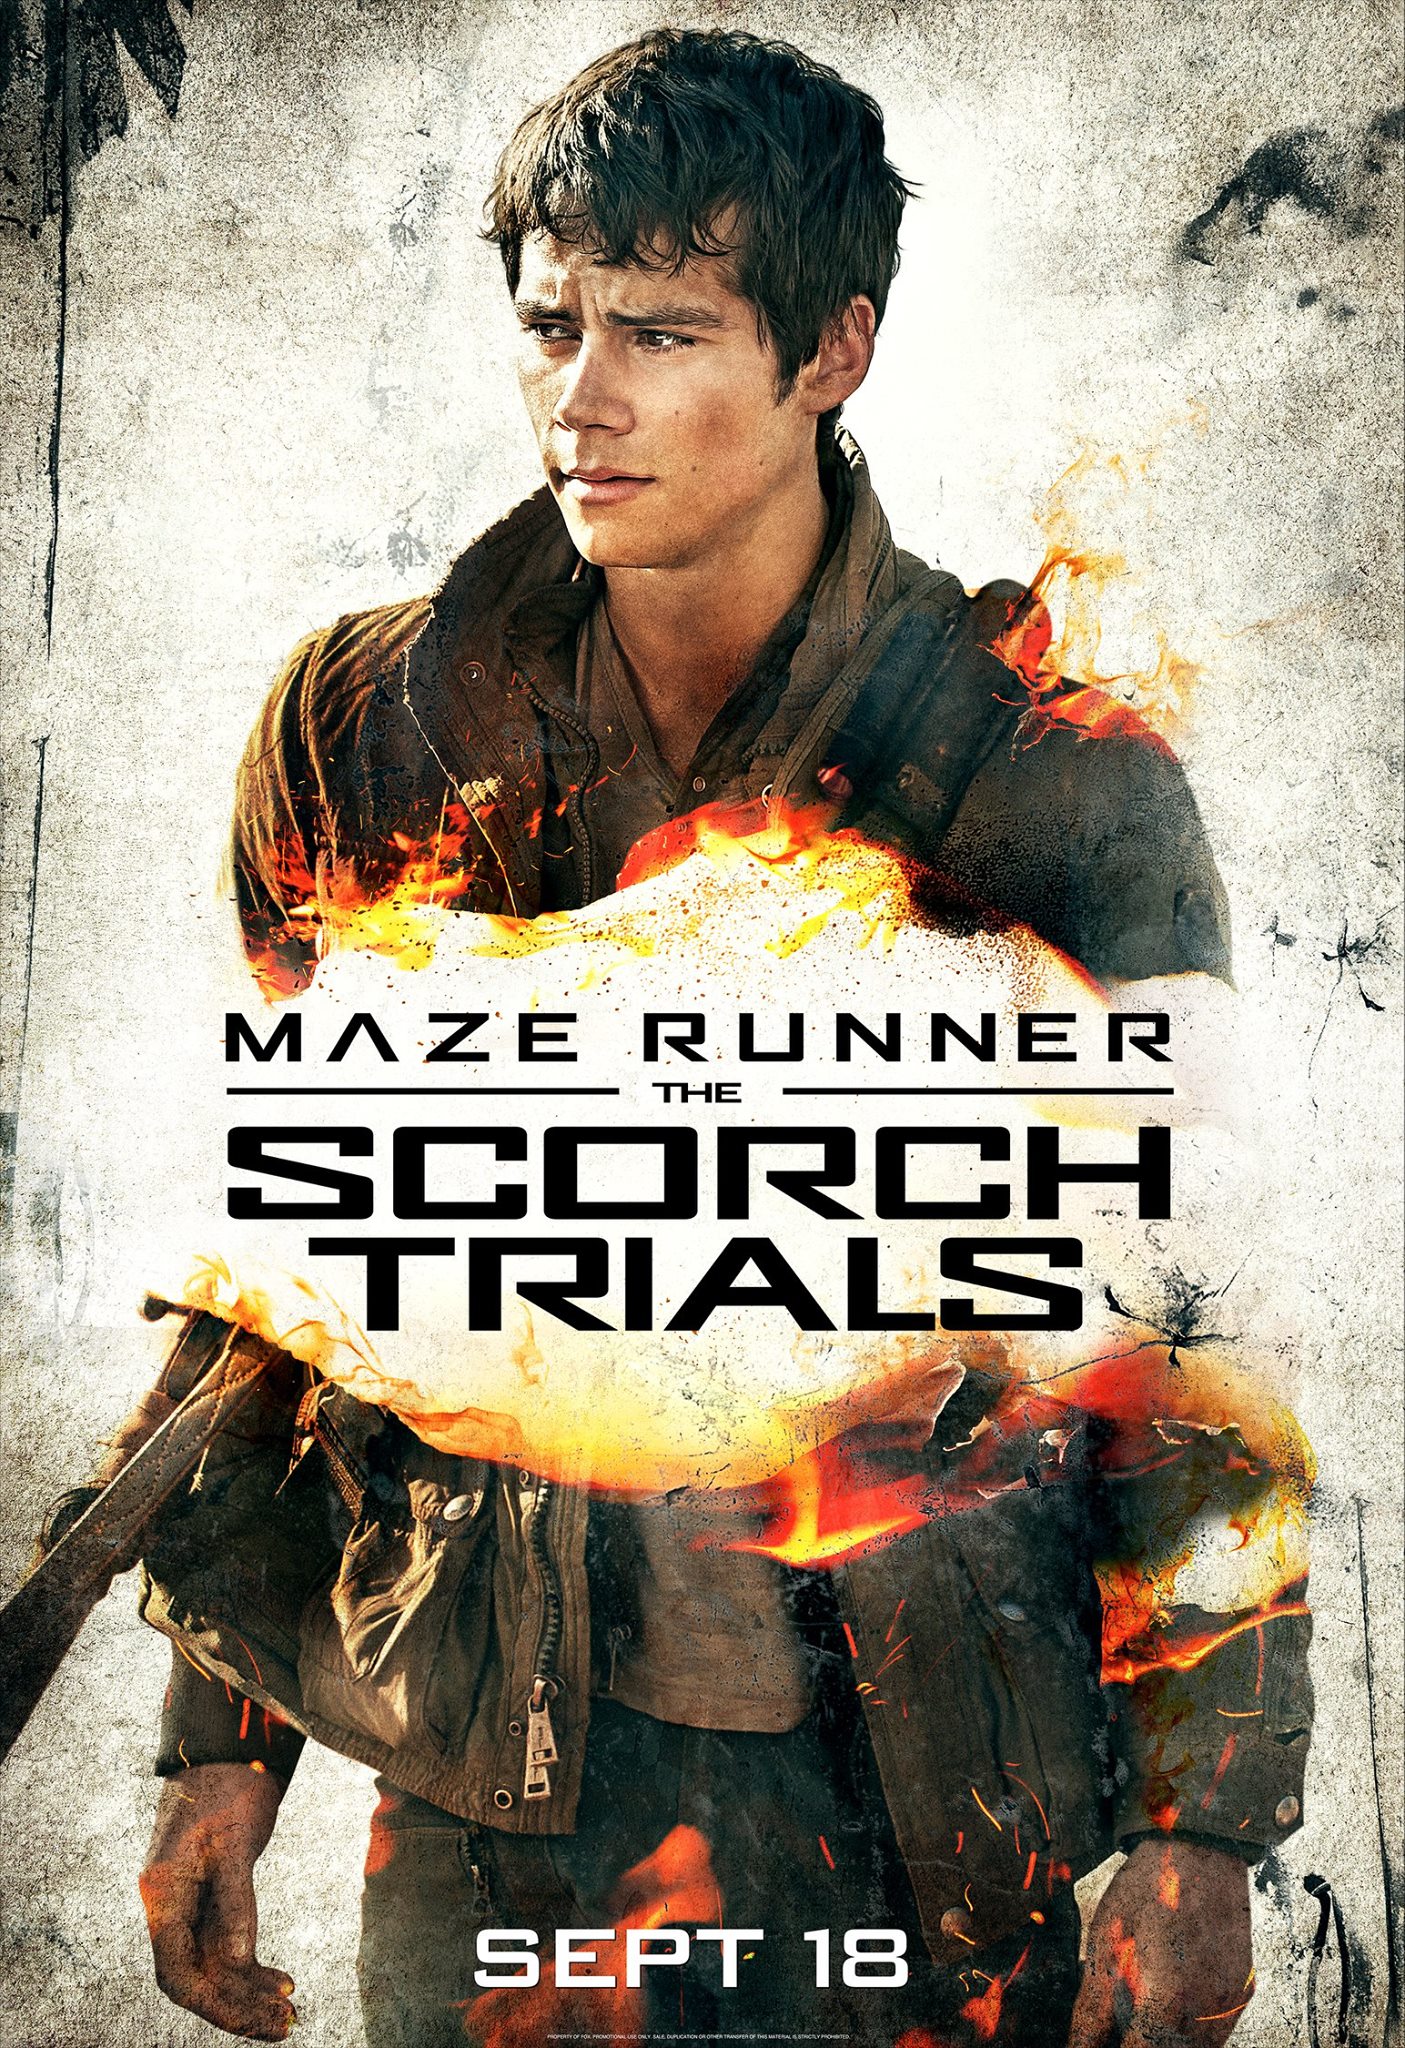 Dylan O’Brien Maze Runner The Scorch Trials poster